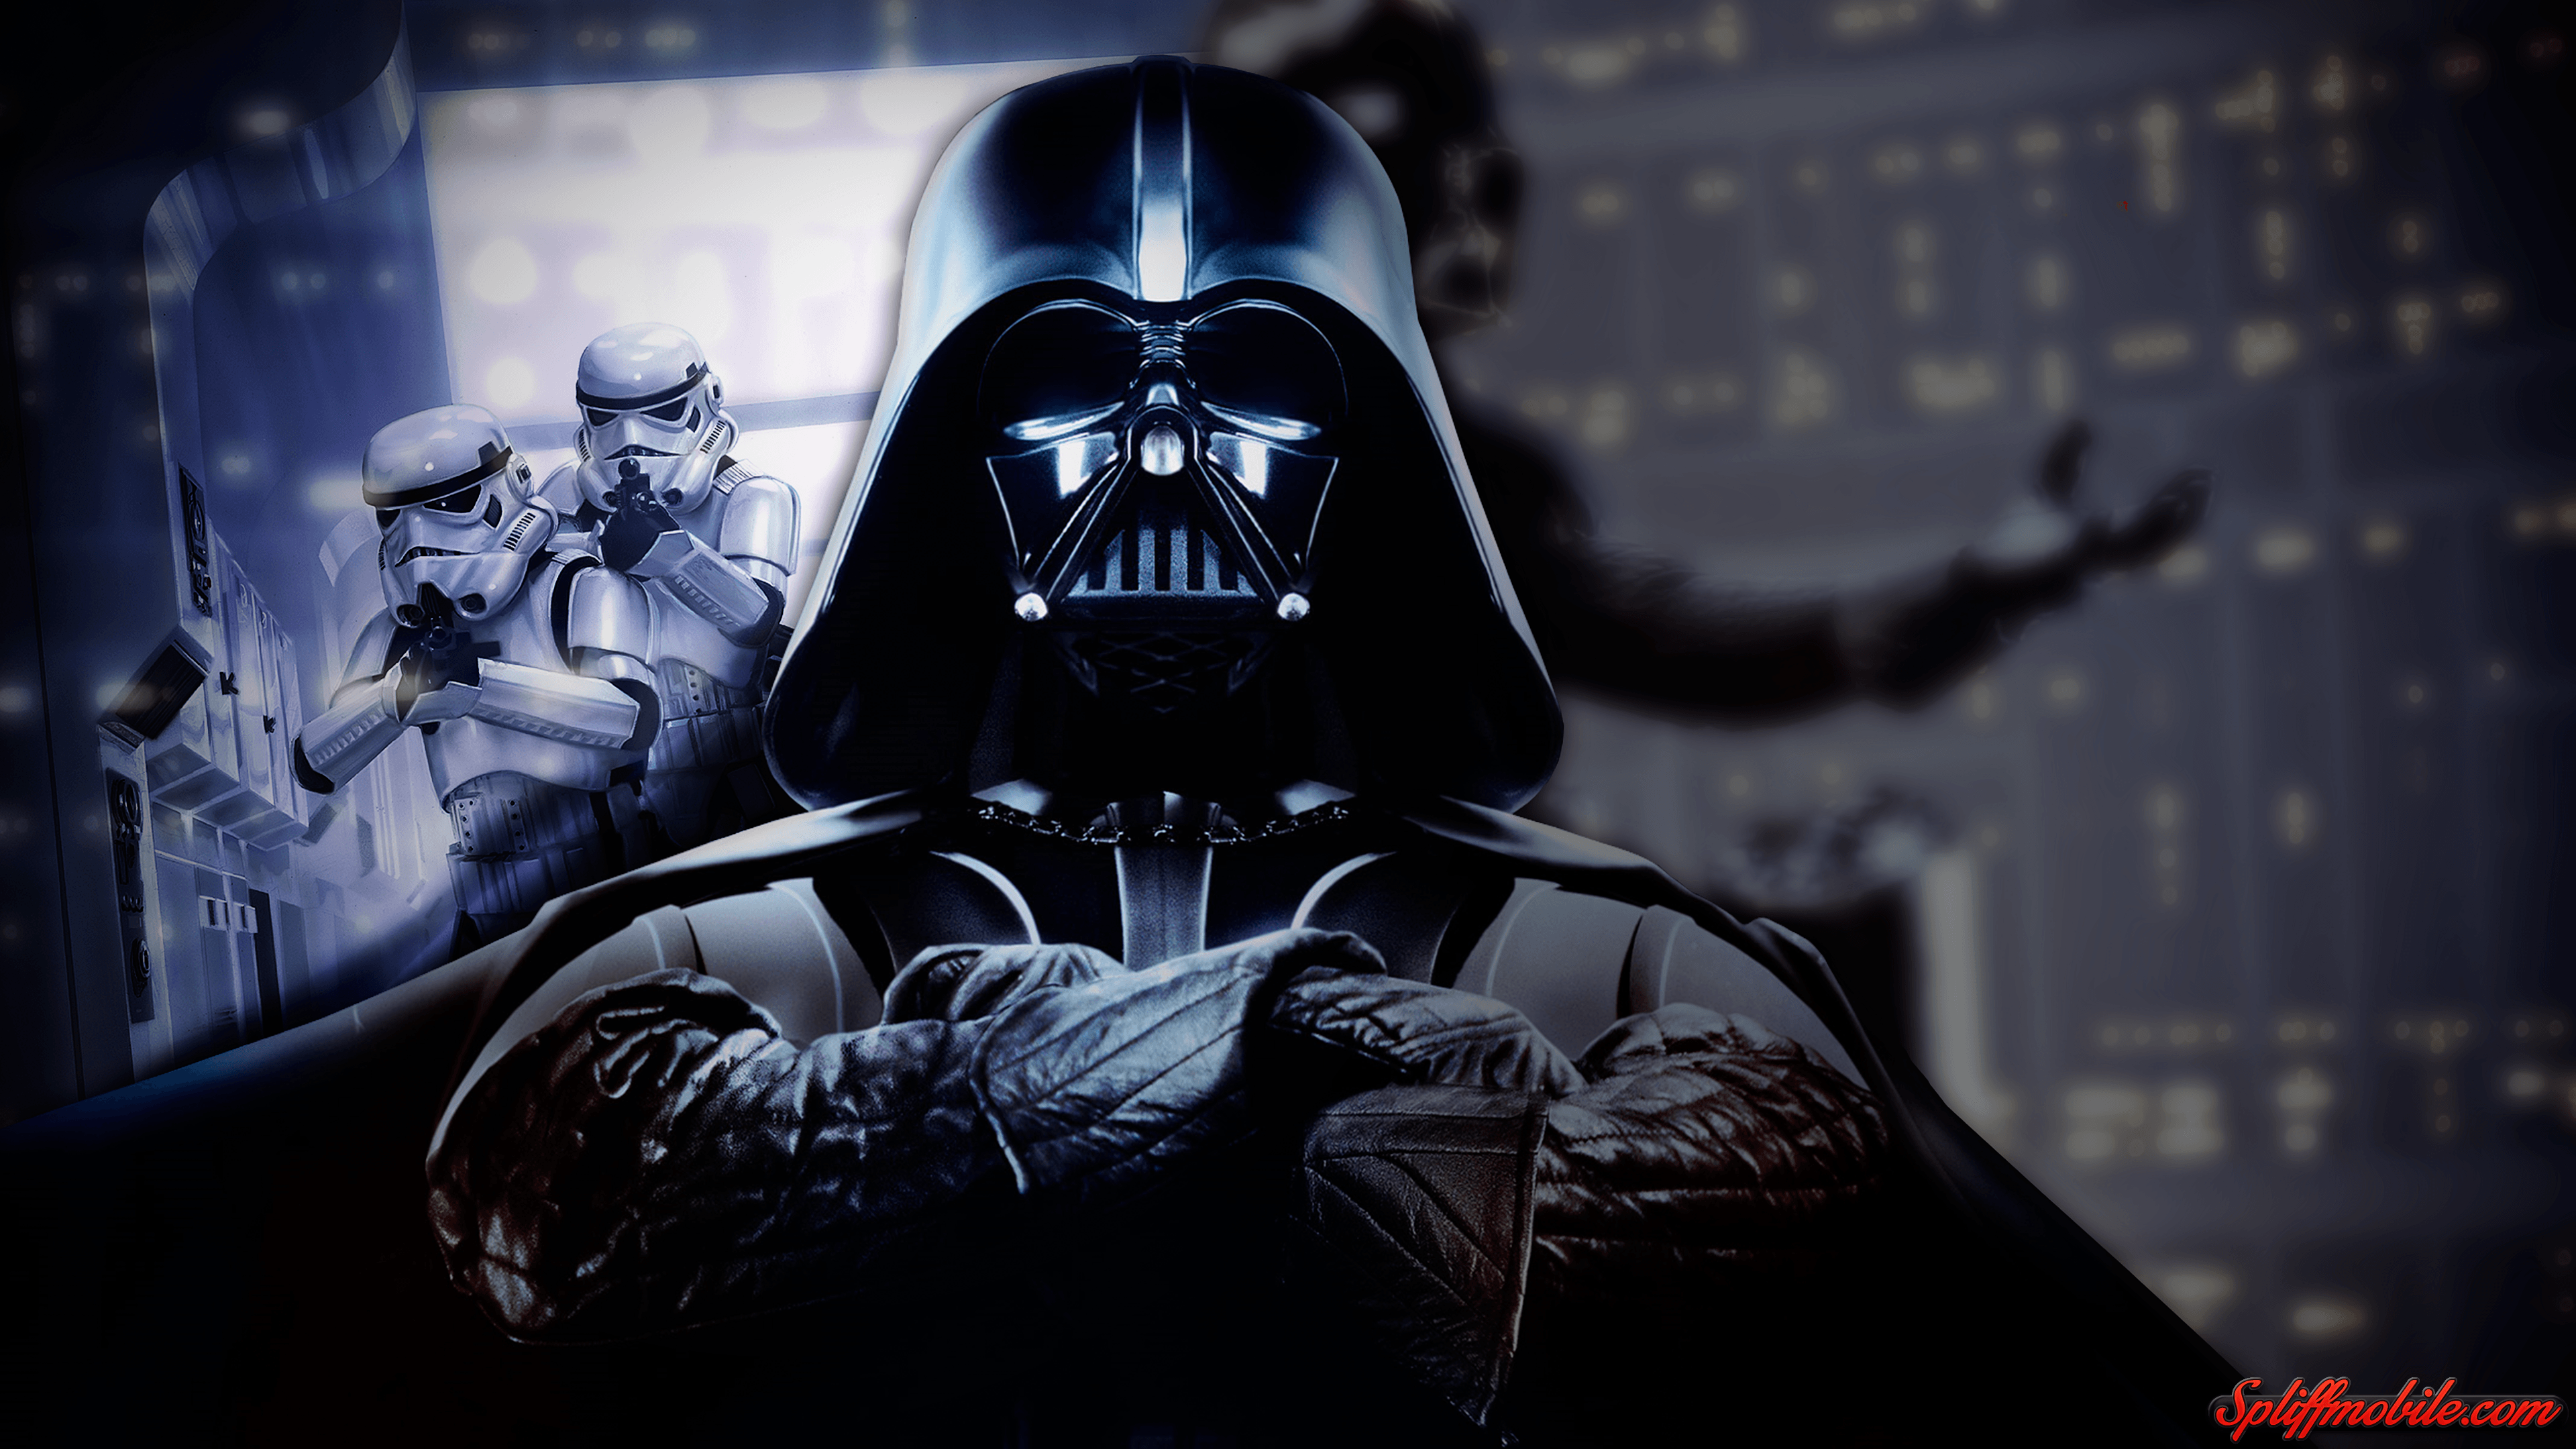  Darth  Vader  1080p Wallpapers  Wallpaper  Cave